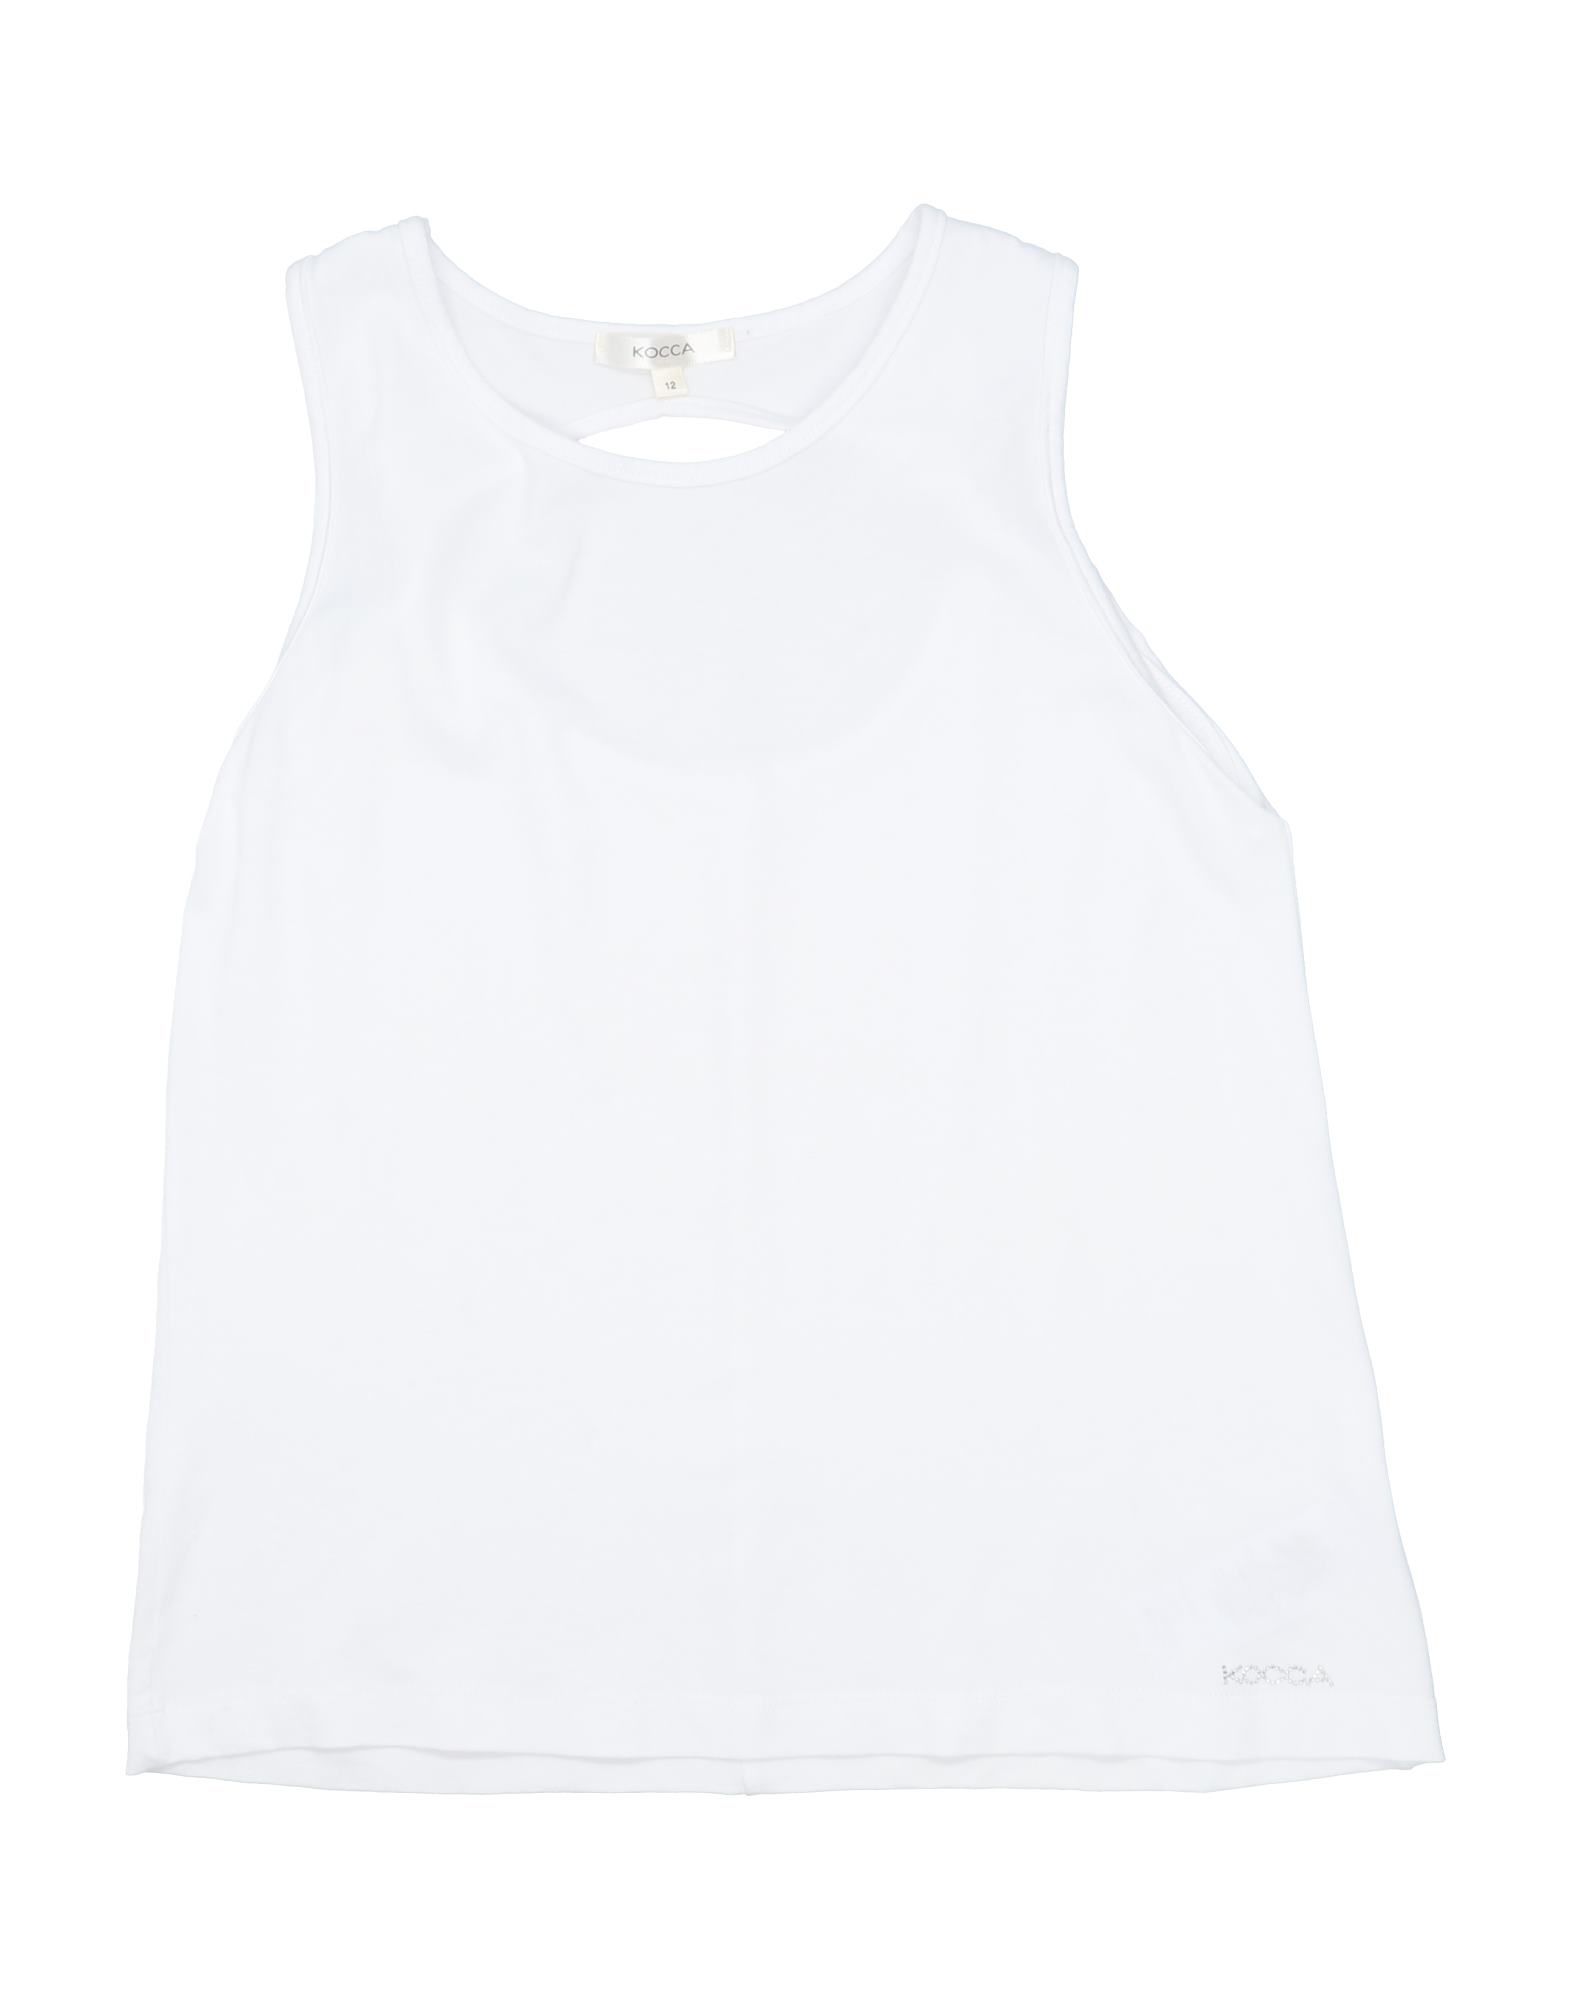 Kocca Kids' T-shirts In White